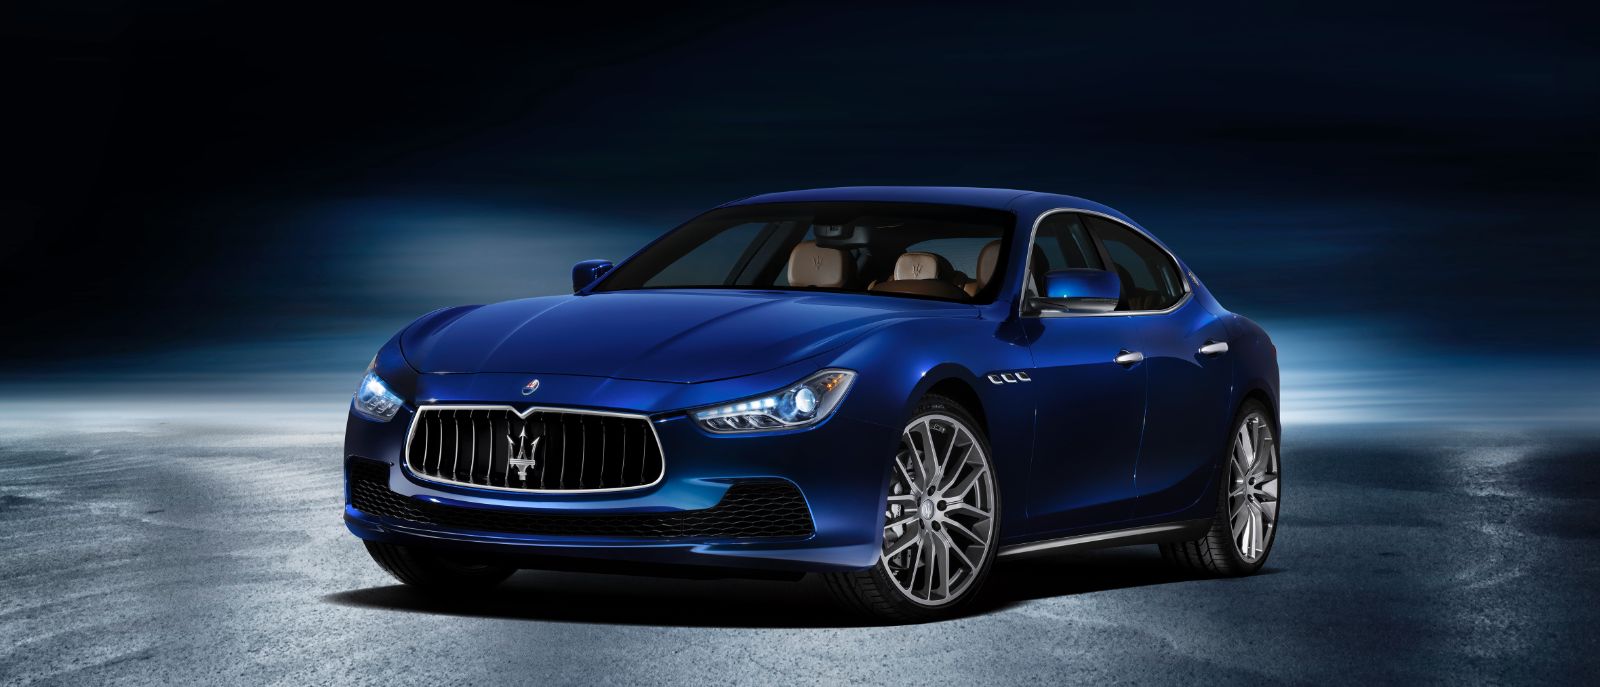 Maserati-Ghibli-3-4-anteriore-blu.jpg